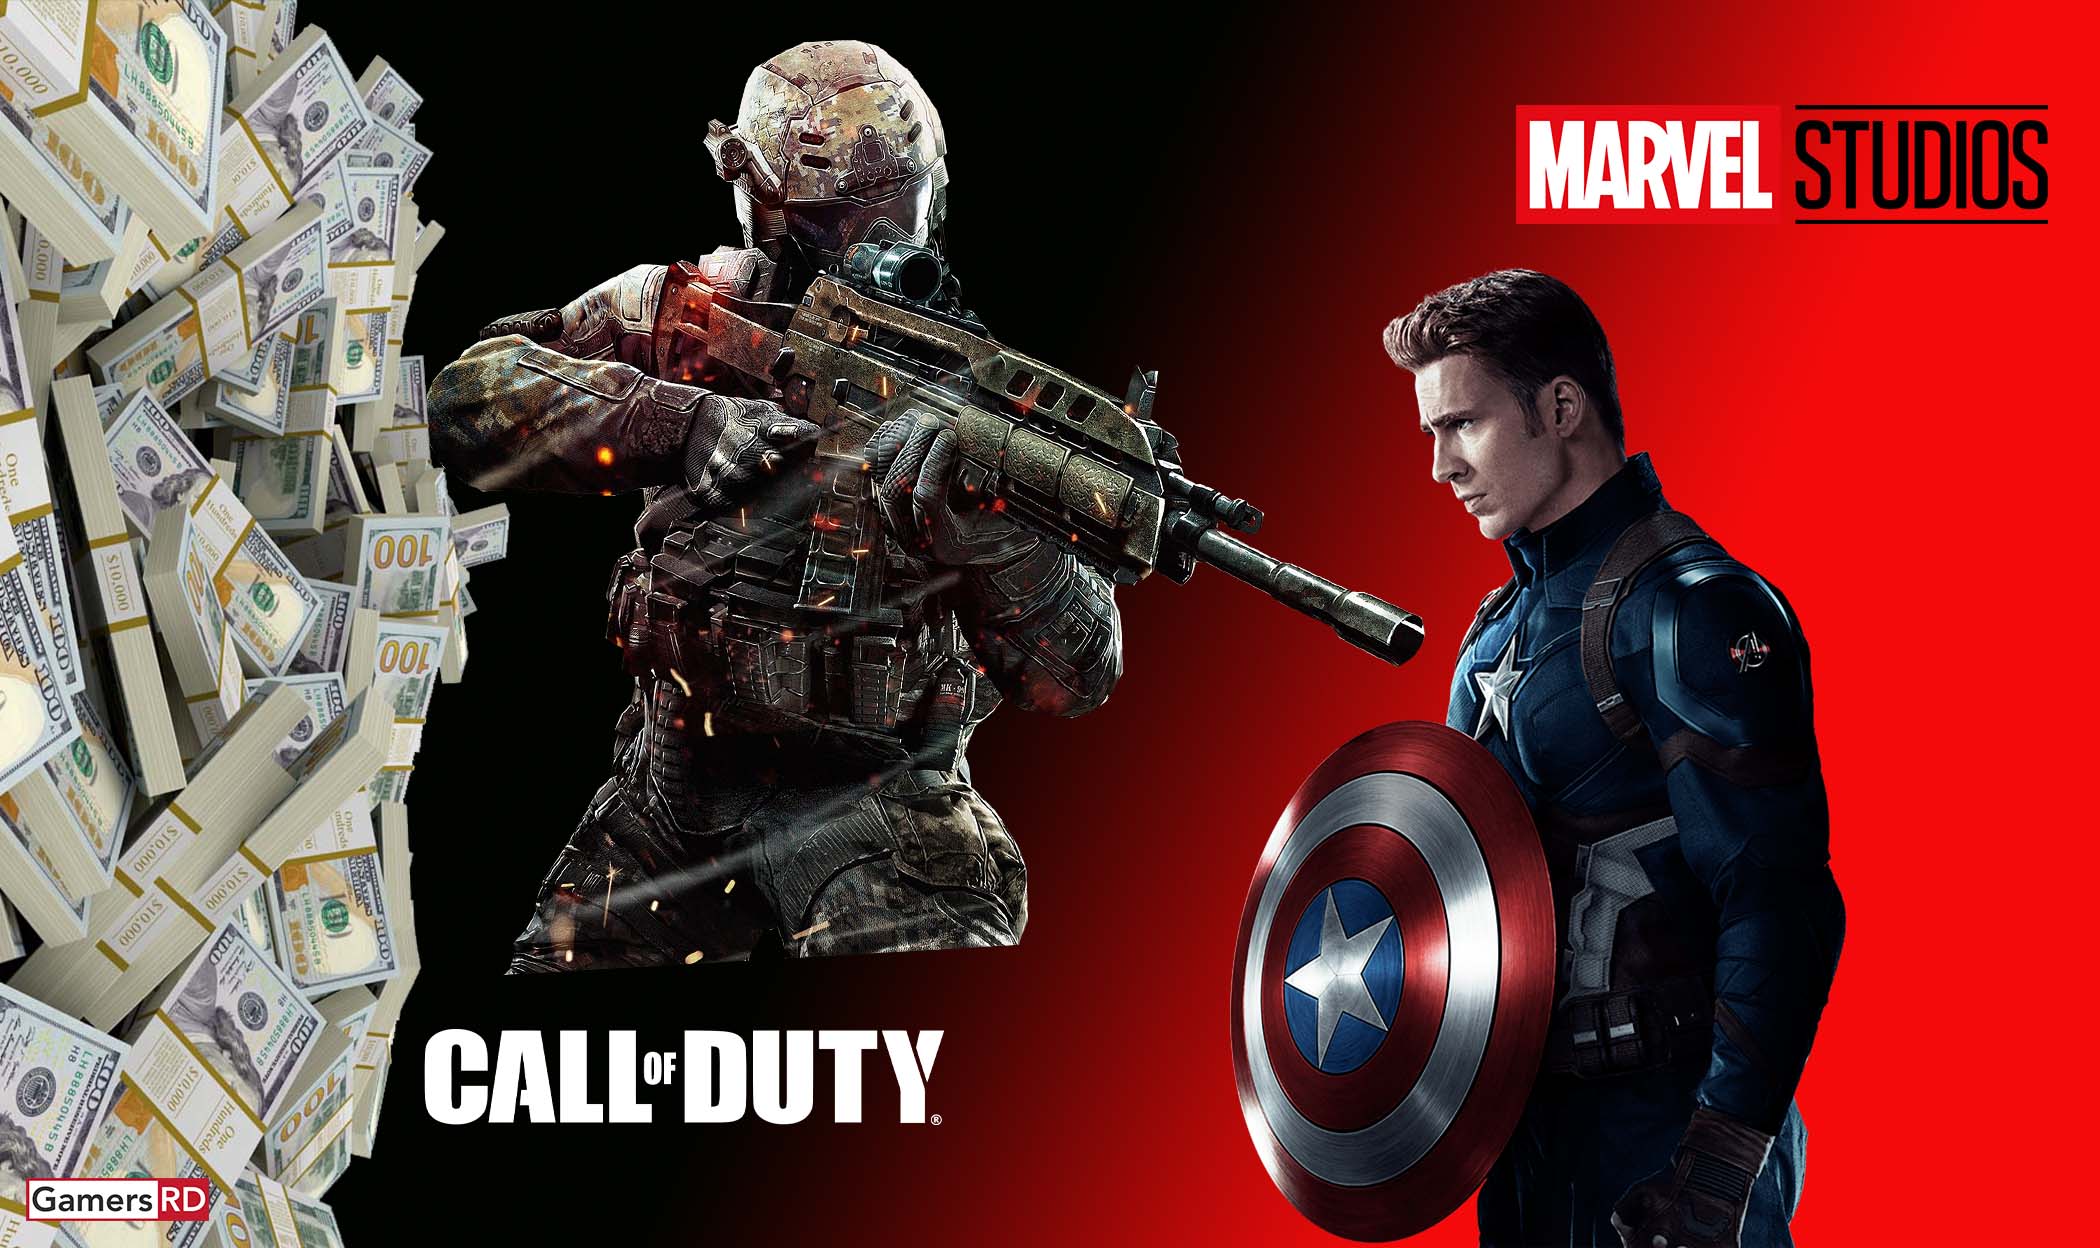 Call of Duty, Marvel, Marvel Studios, Black Ops, Ghost, Modern Warfare,Activision, GamersRD